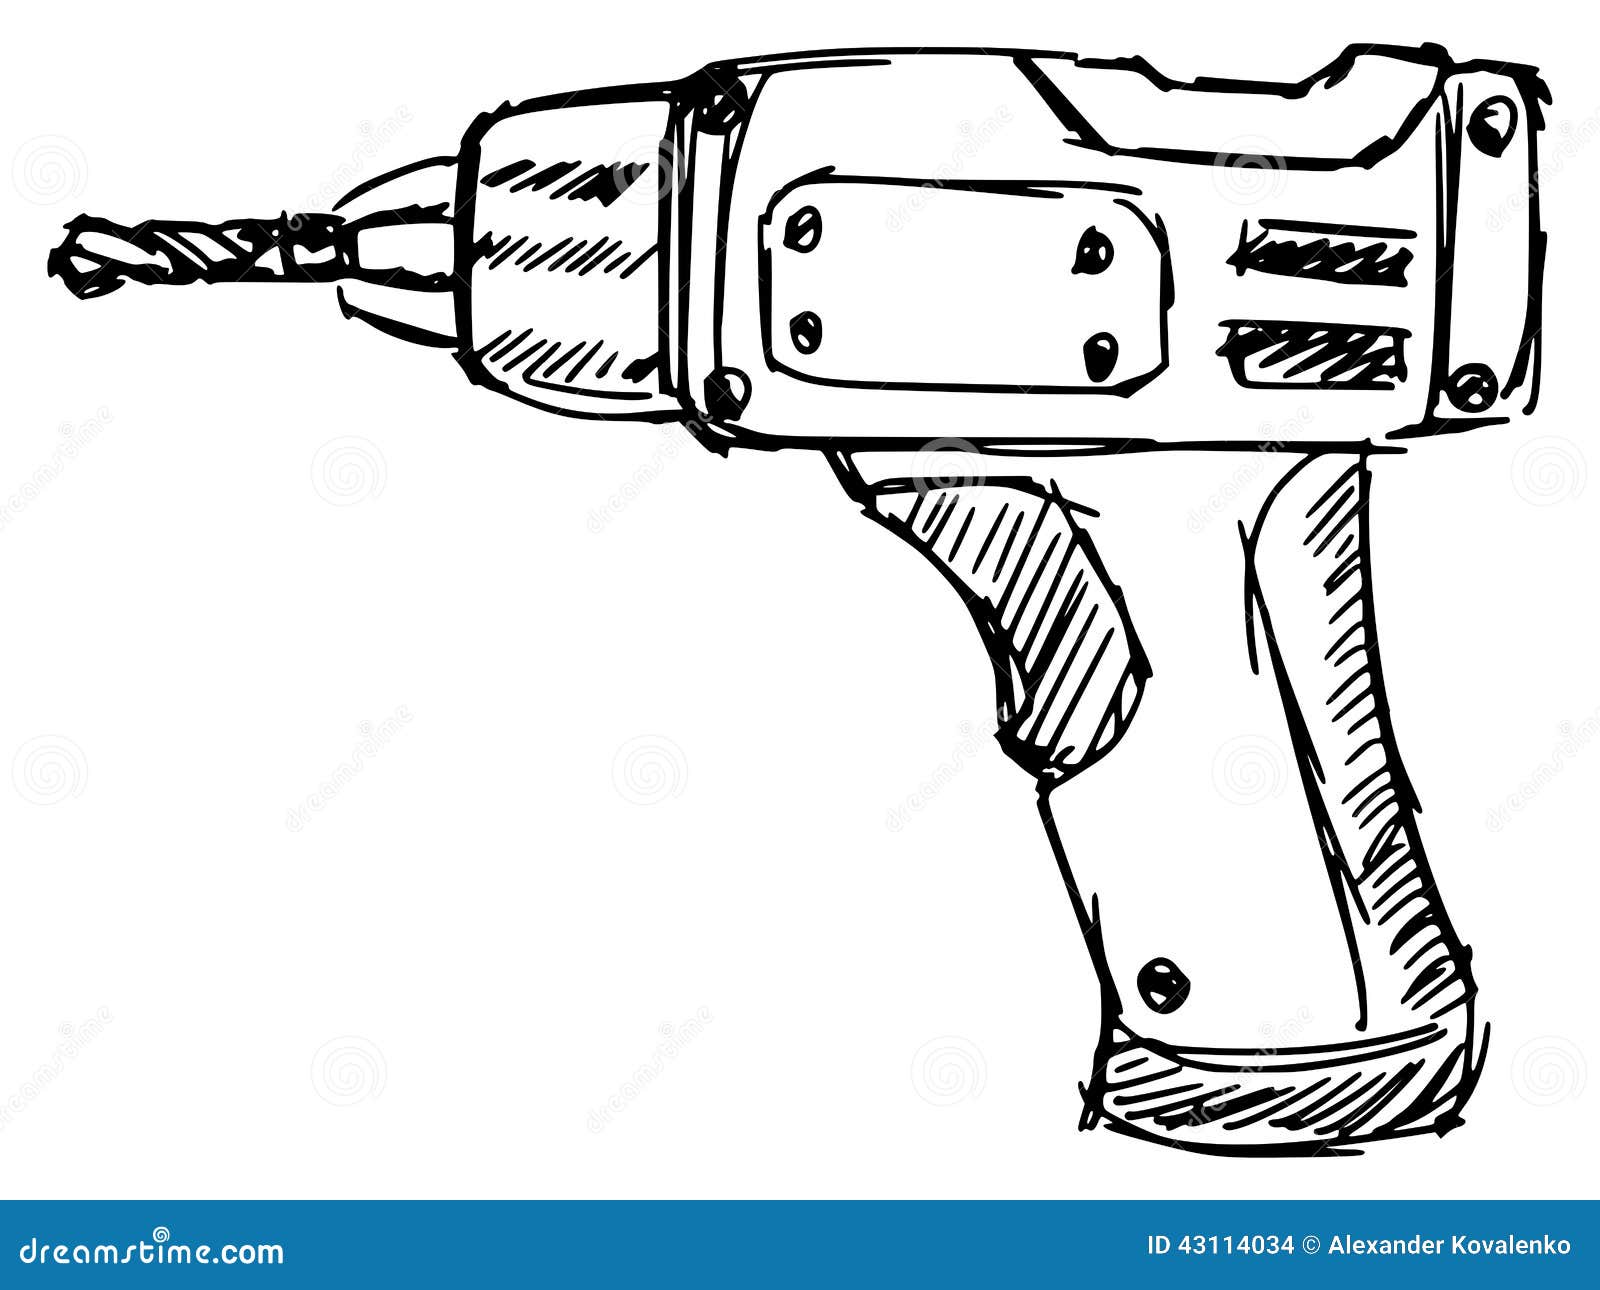 Drill stock vector. Illustration of gimlet, steel, maintenance - 43114034